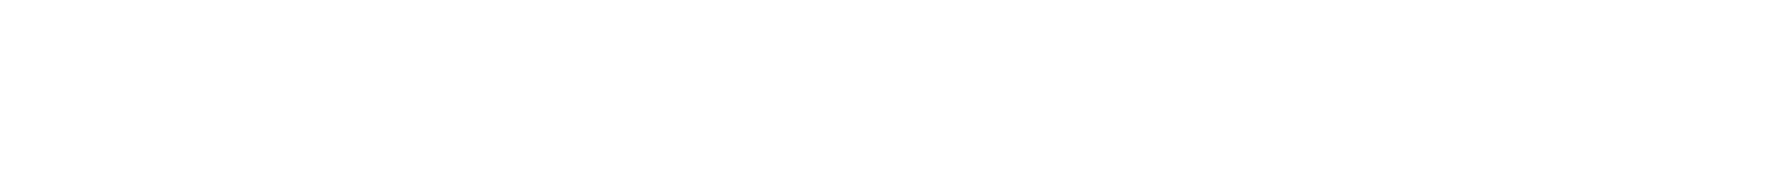 boardmix logo